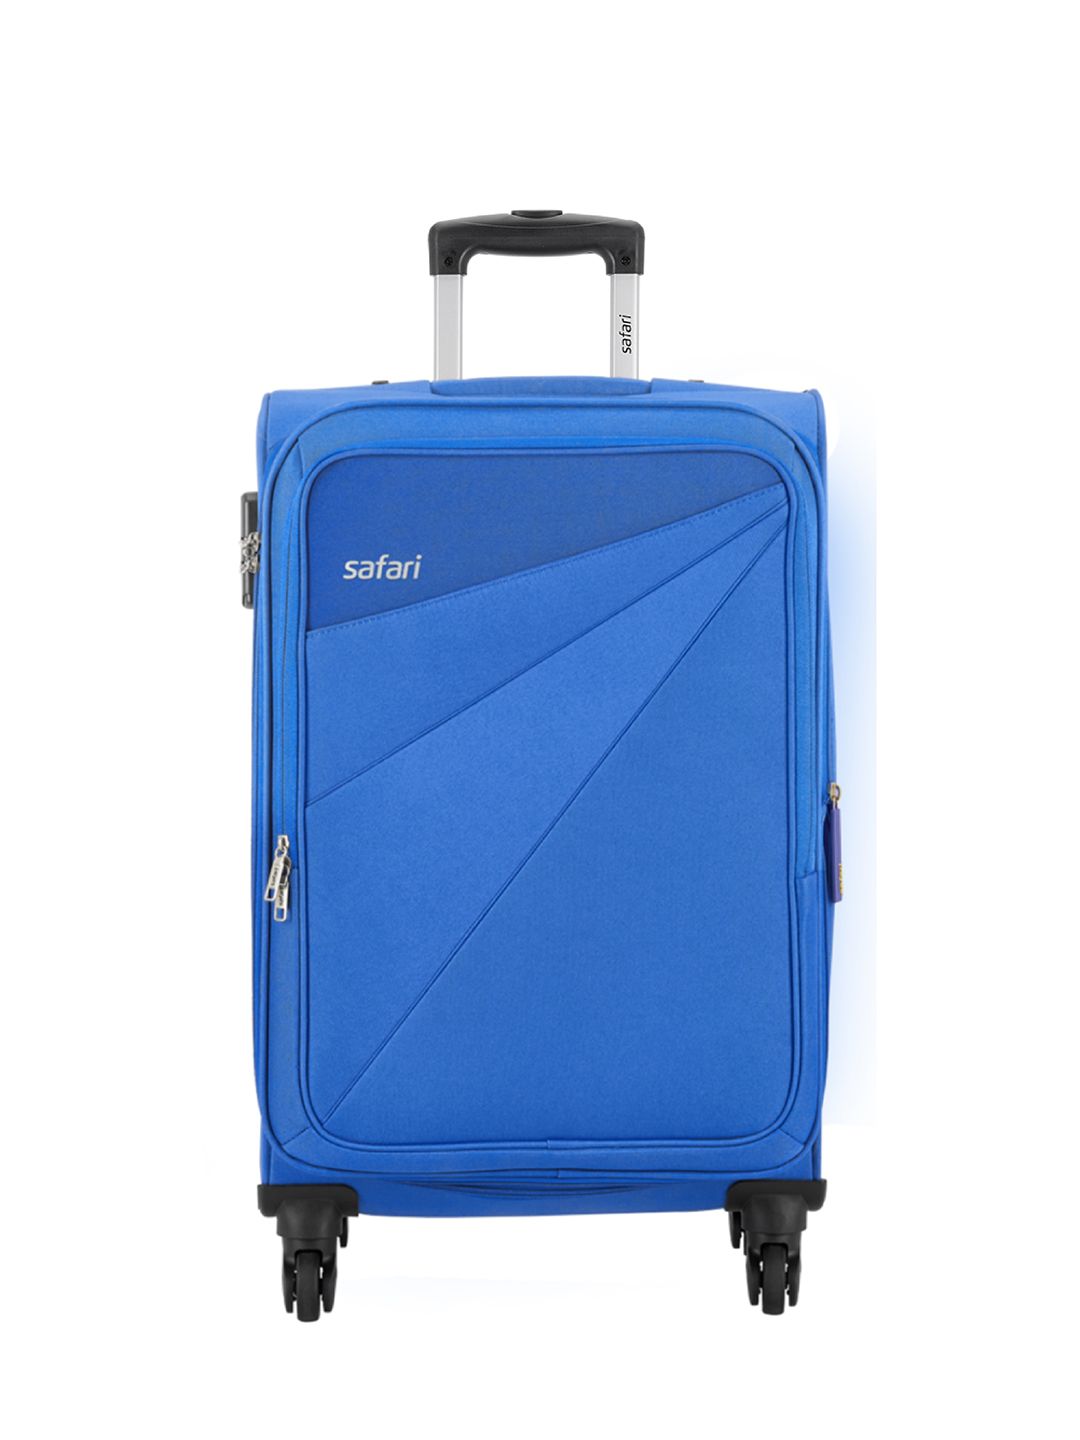 Safari Blue Mimik Large Trolley Bag Price in India